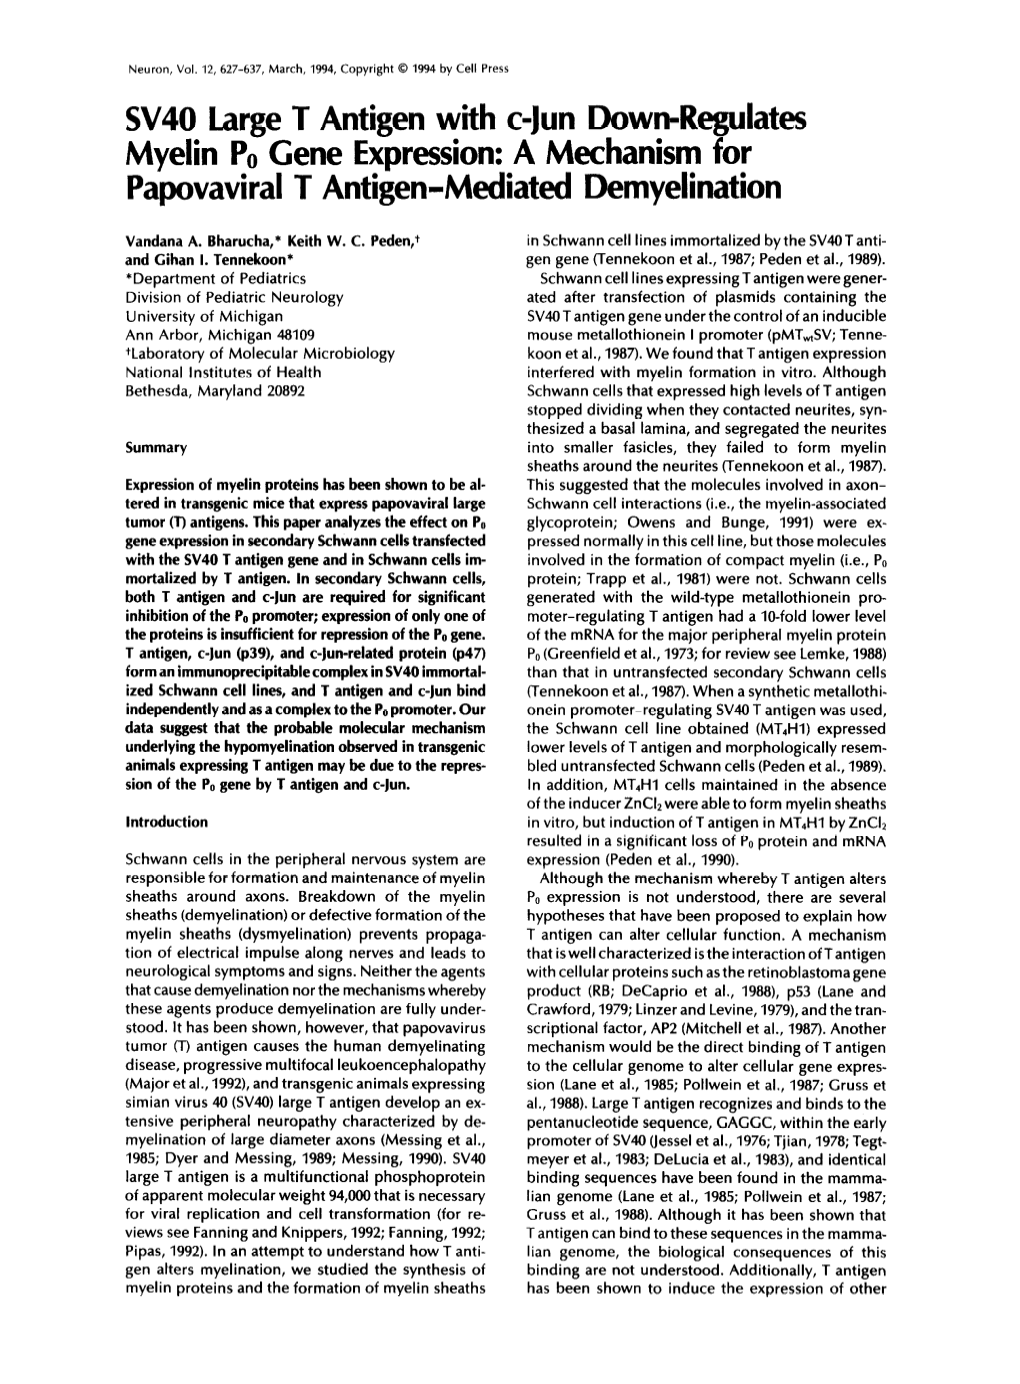 SV40 Large T Antigen with C-Jun Down-Regulates Myelin PO Gene Expression: a Mechanism for Papovaviral T Antigen-Mediated Demyelination